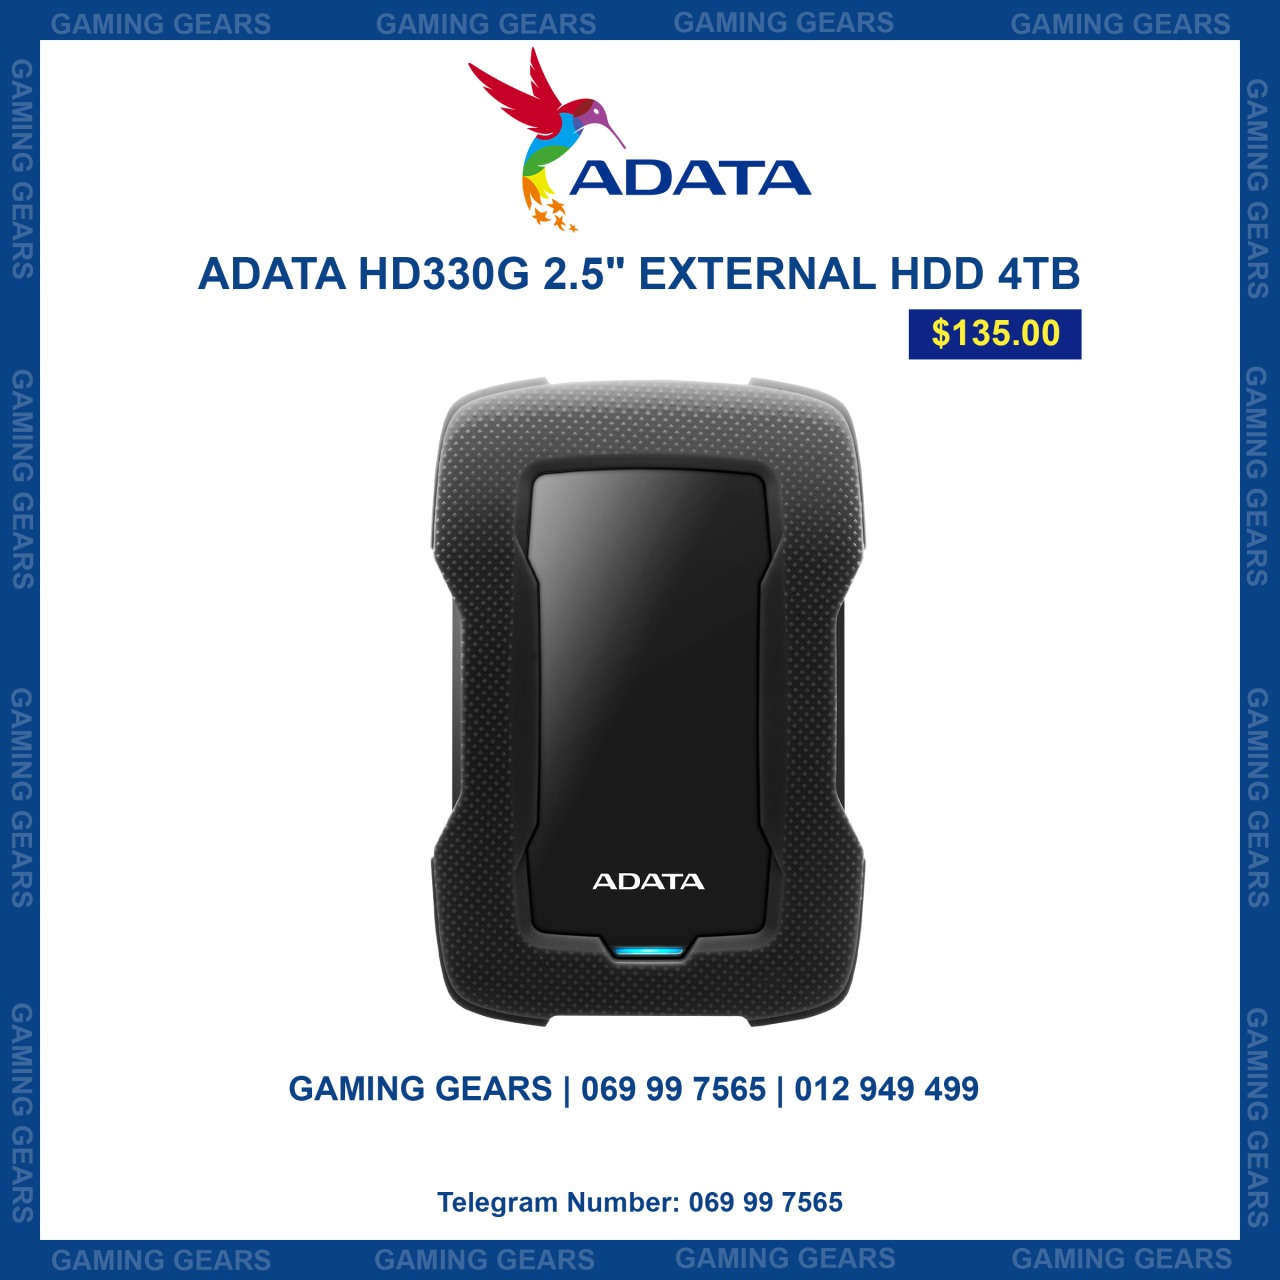 ADATA HD330G 2.5" EXTERNAL HDD 4TB BLACK